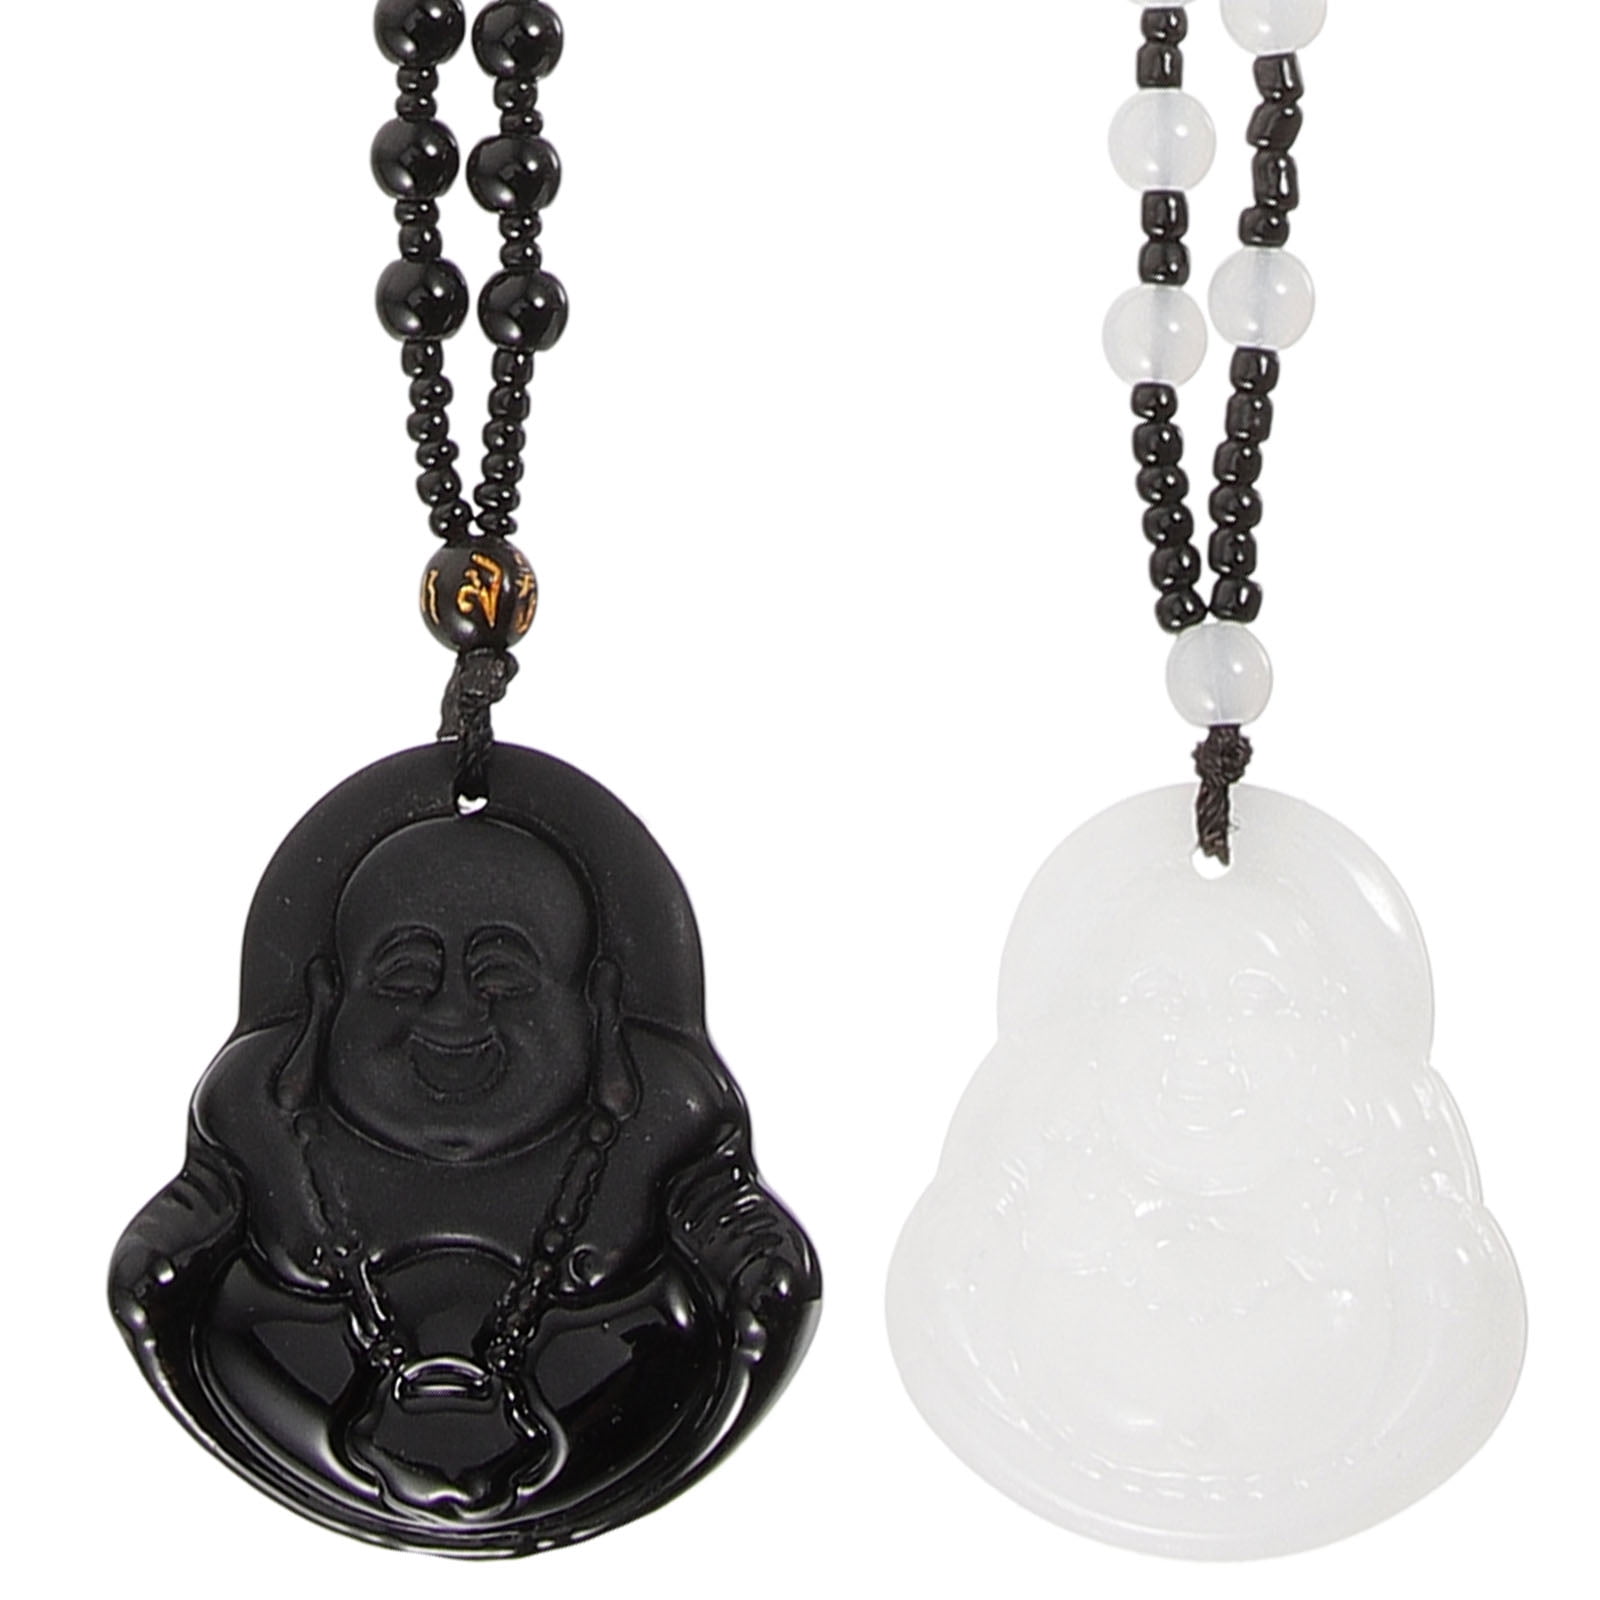 JewelryVolt Womens Adjustable Black String Necklace w/Buddha Pendant Design